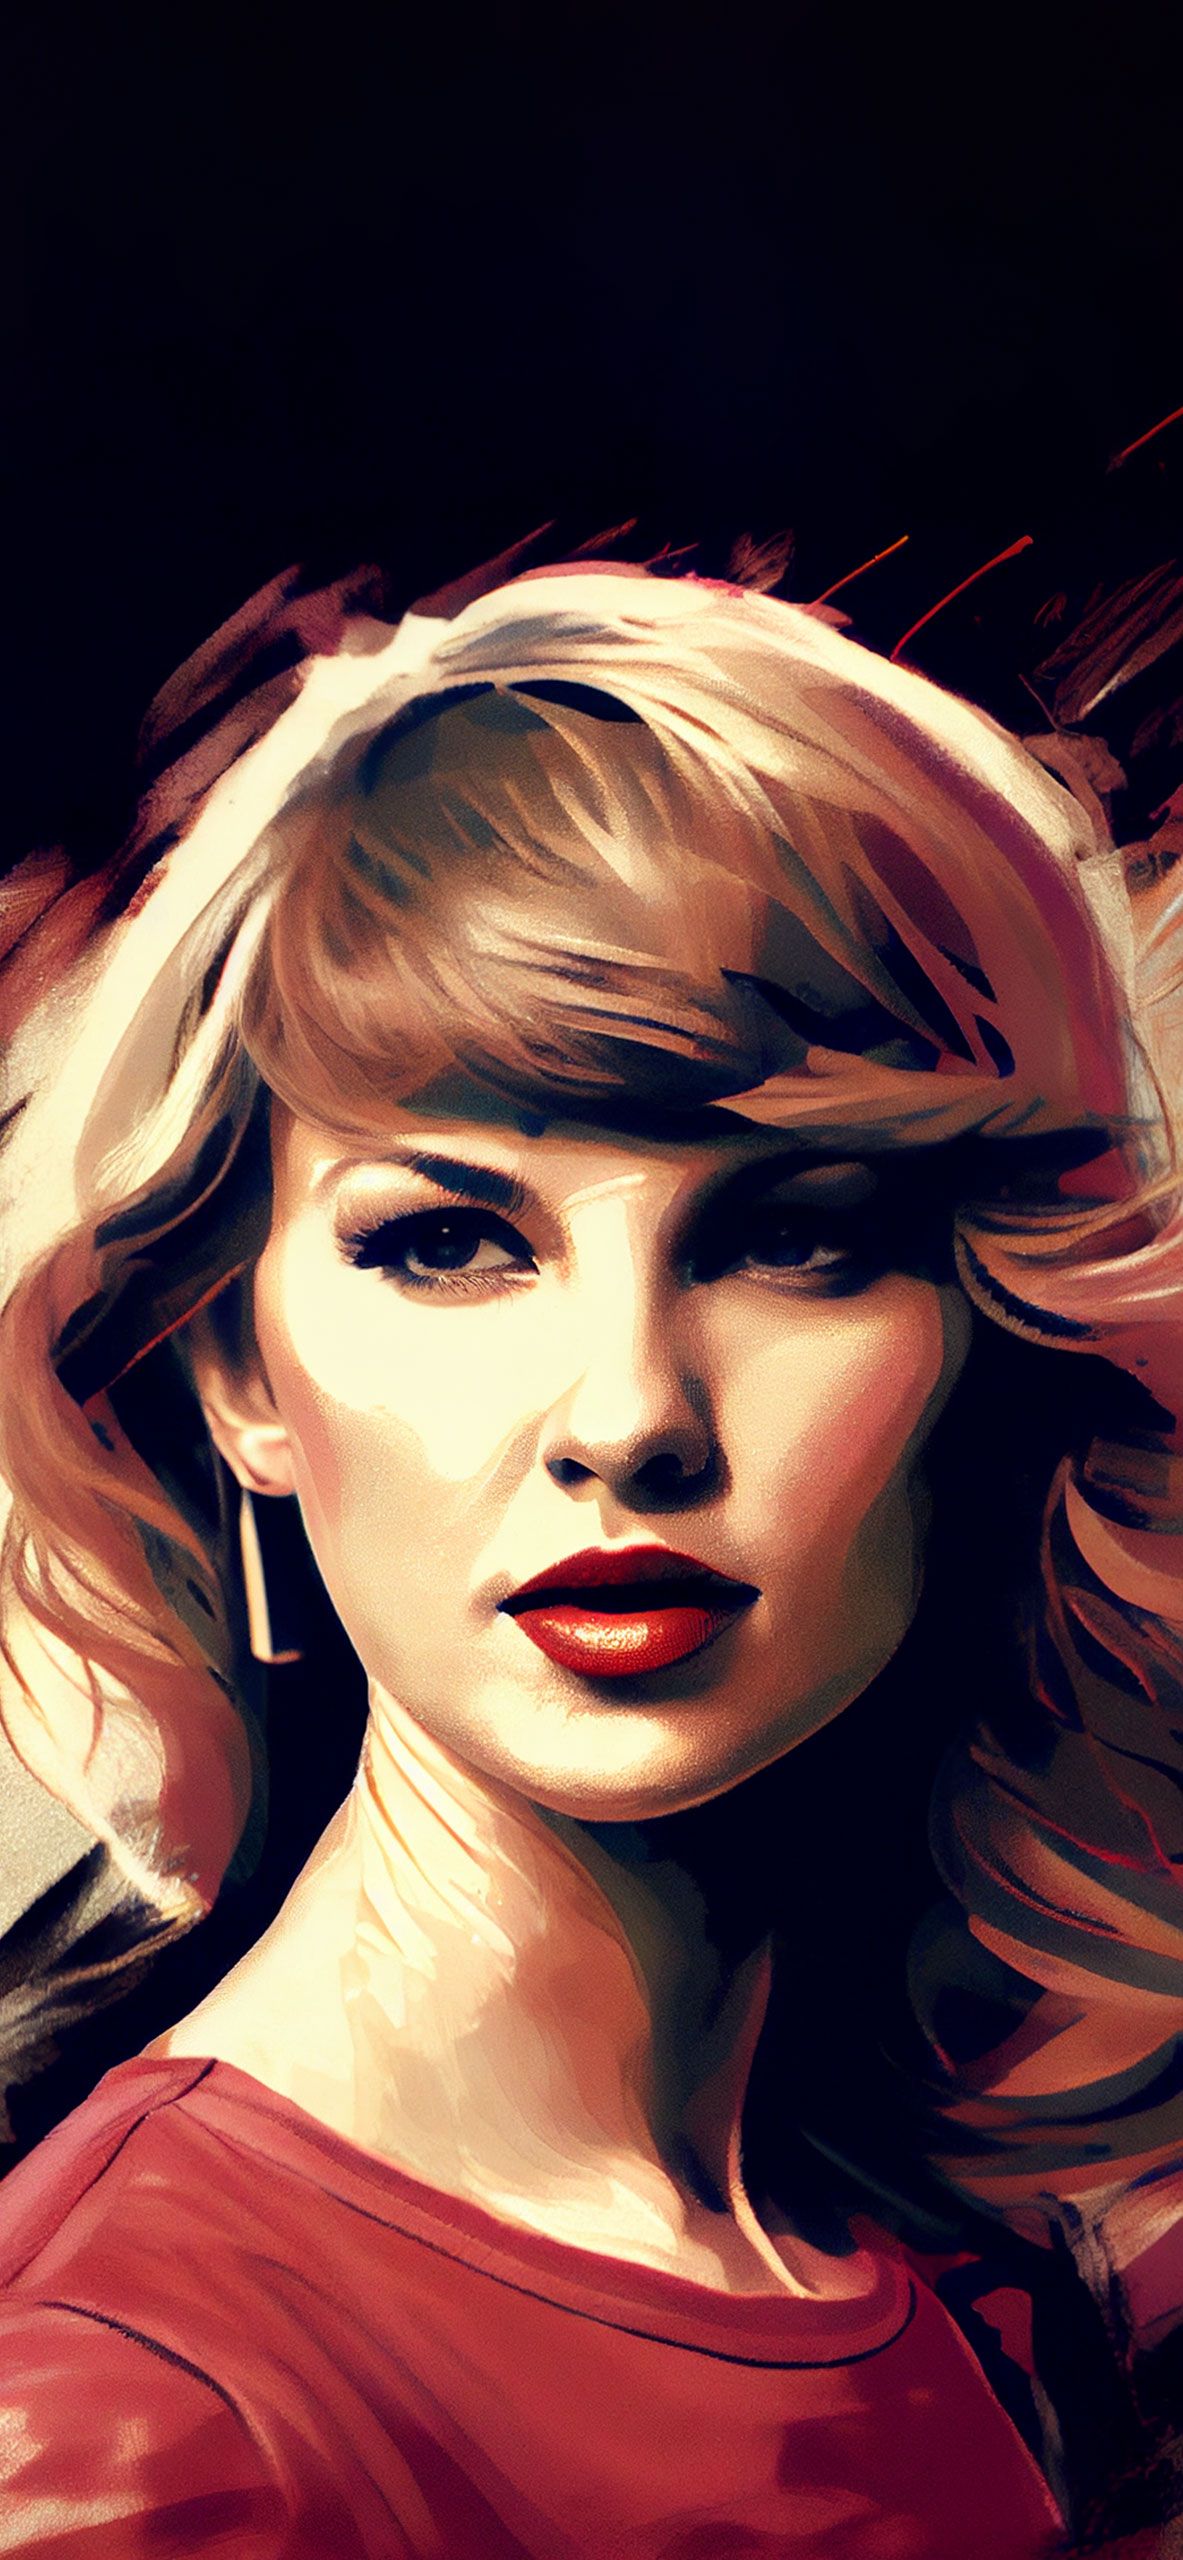 Taylor swift, 2019, singer, pop, country, blonde, red lips, portrait, digital art, black background - Taylor Swift